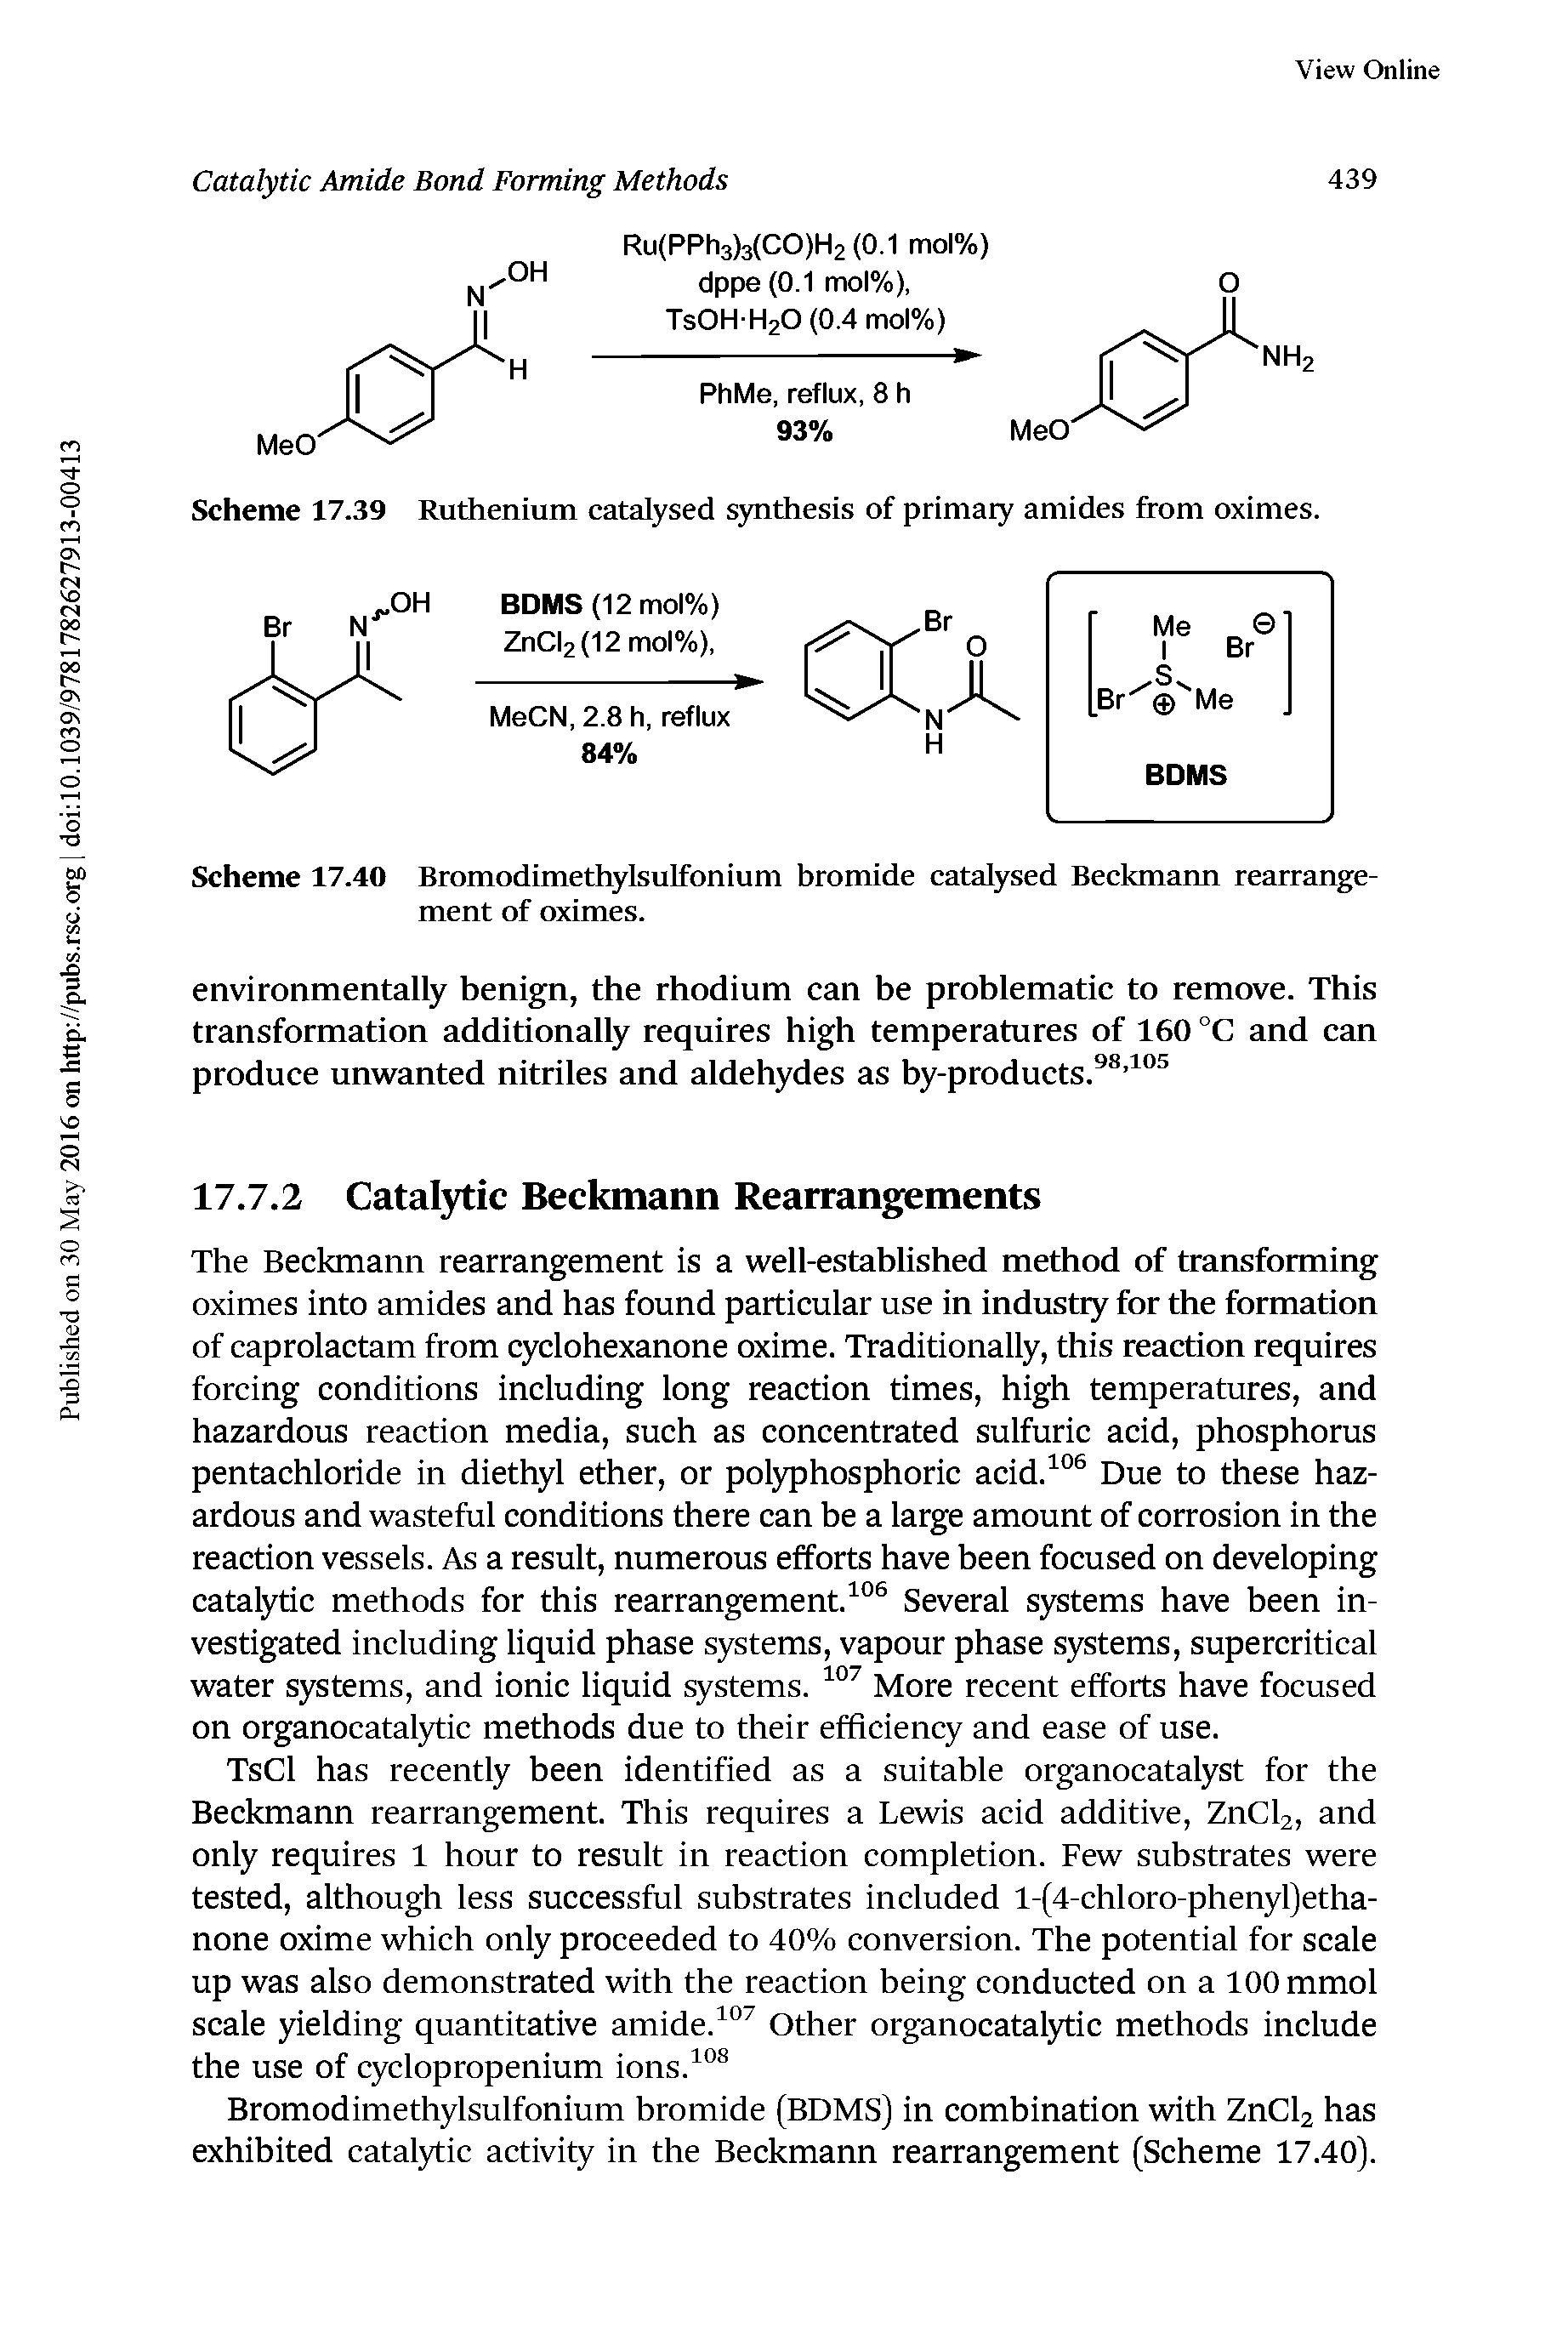 Scheme 17.40 Bromodimethylsulfonium bromide catalysed Beckmaim rearrangement of oximes.